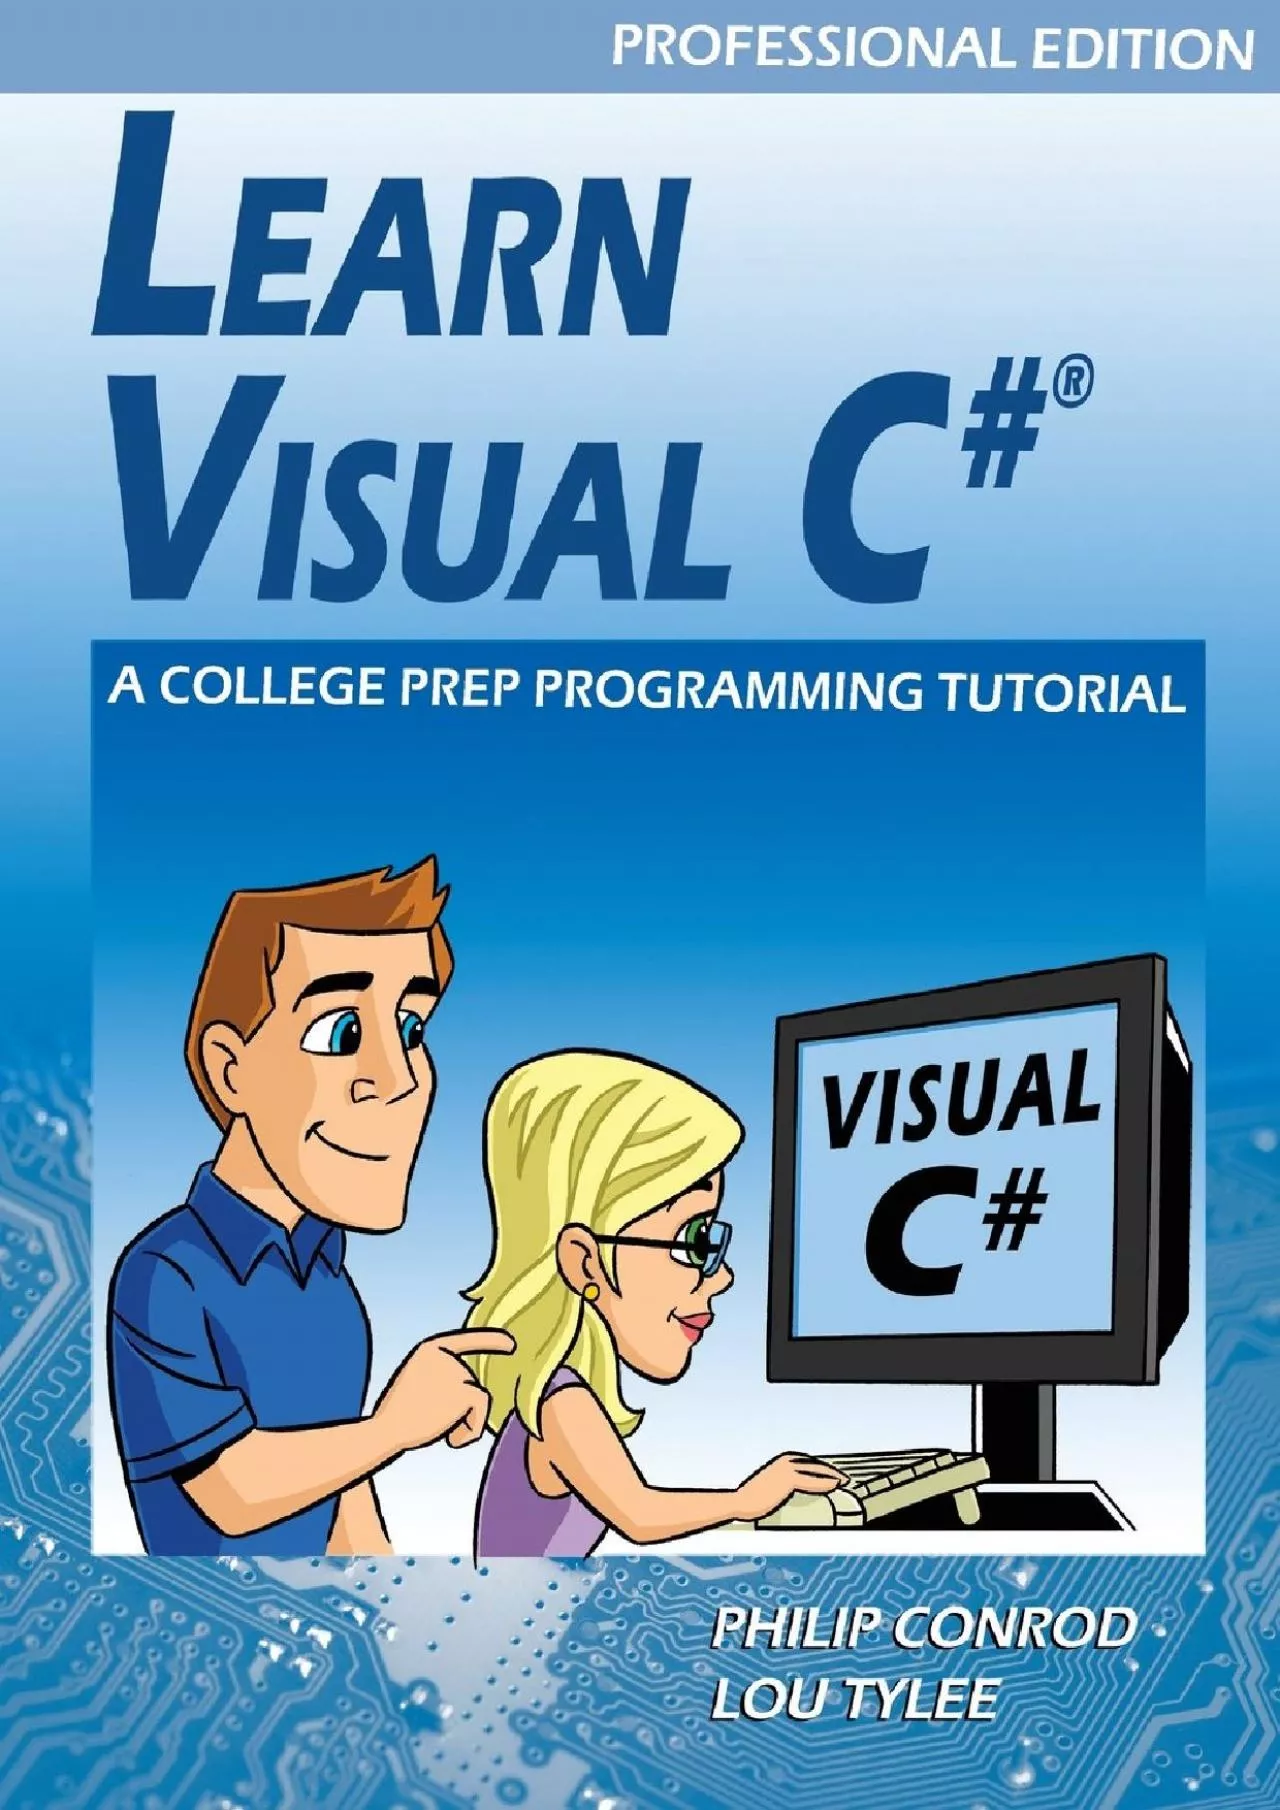 [eBOOK]-Learn Visual C Professional Edition - A College Prep Programming Tutorial